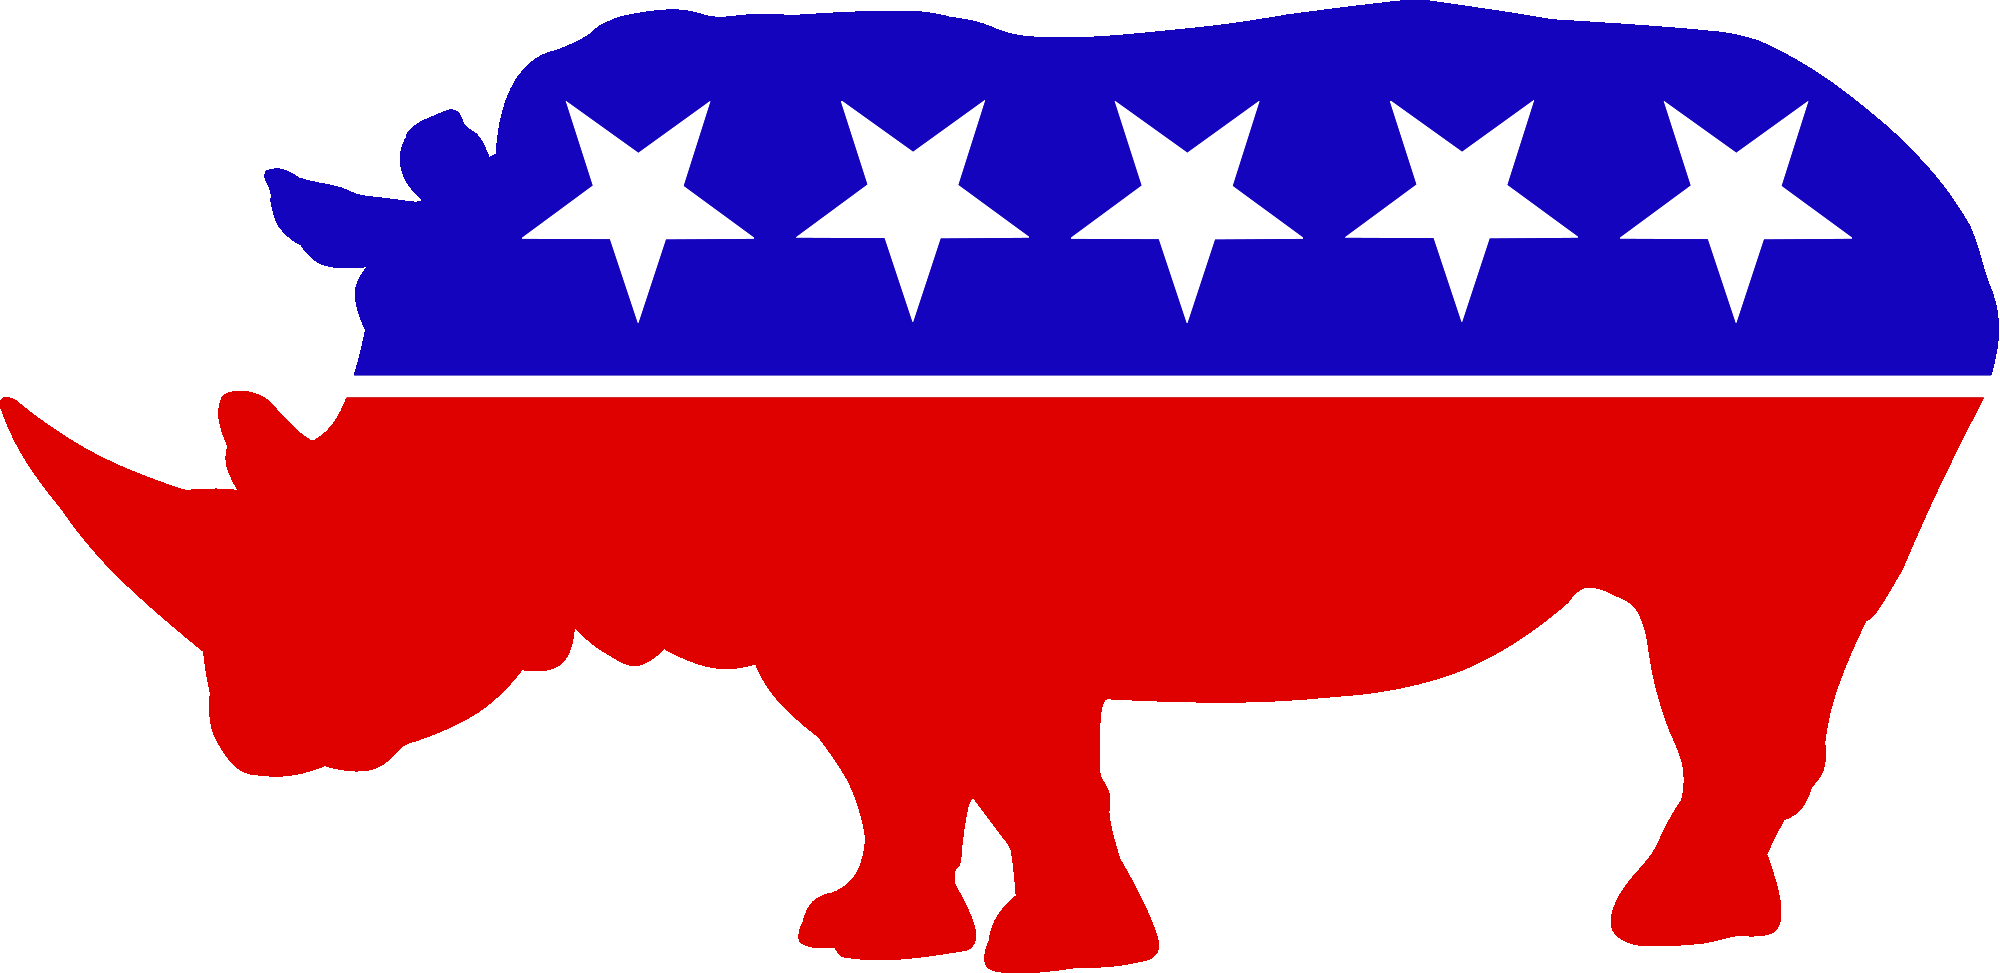 Rino - Republican Elephant (2000x973)